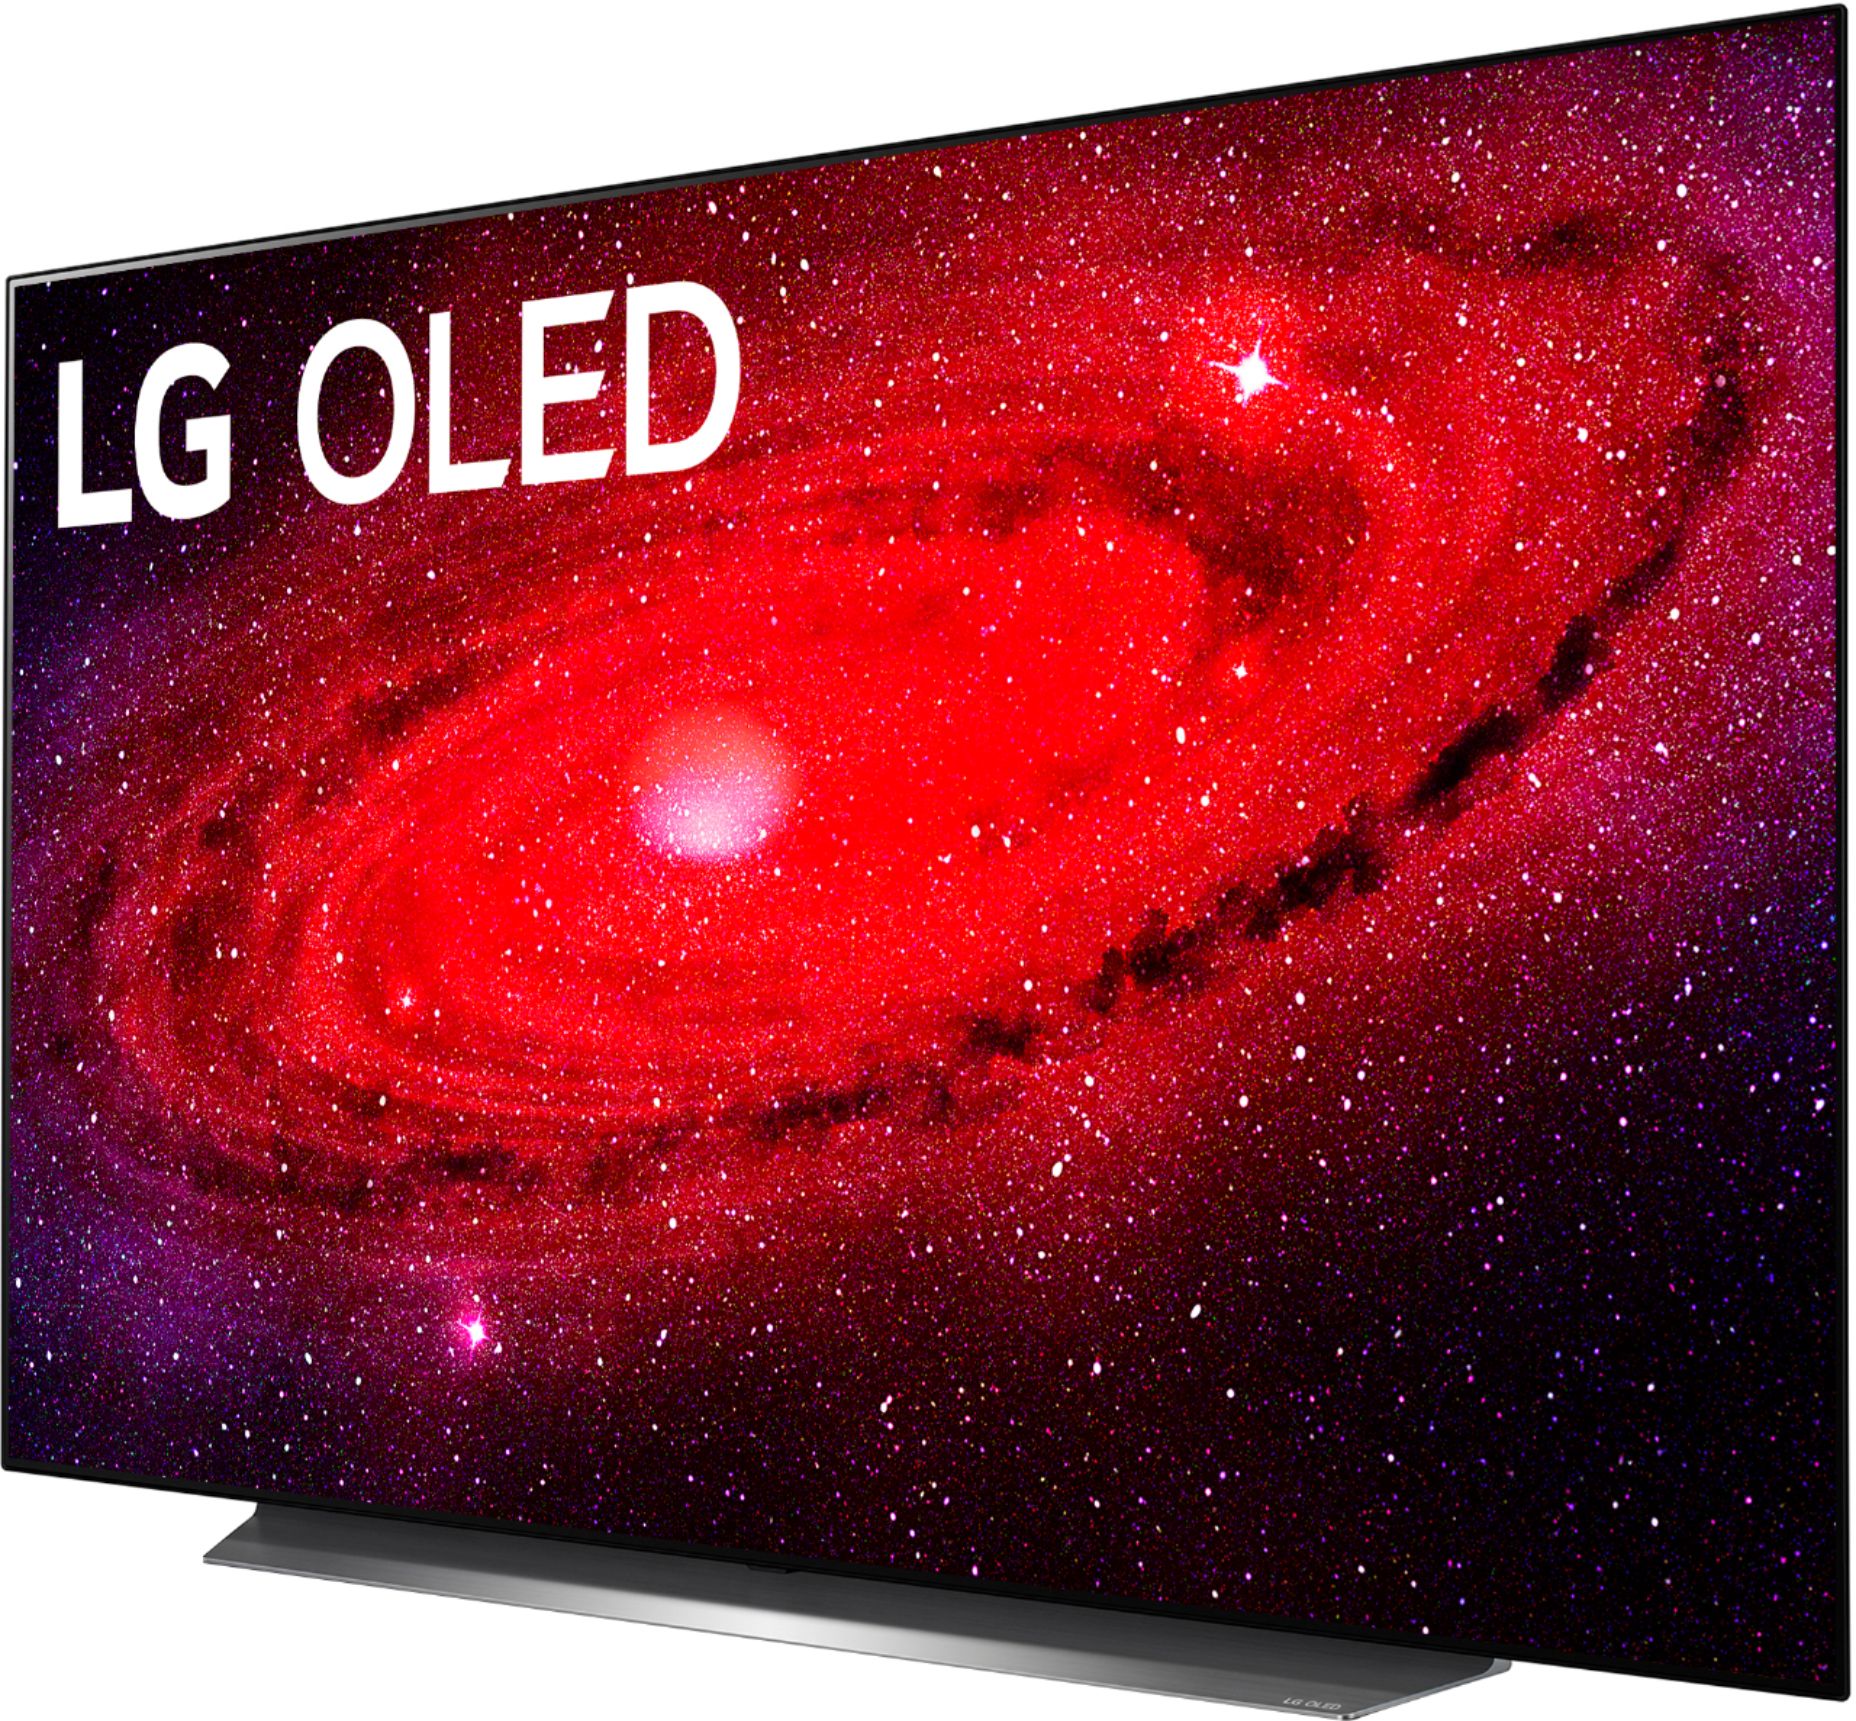 LG 55 Class A1 Series OLED 4K UHD Smart webOS TV OLED55A1PUA - Best Buy